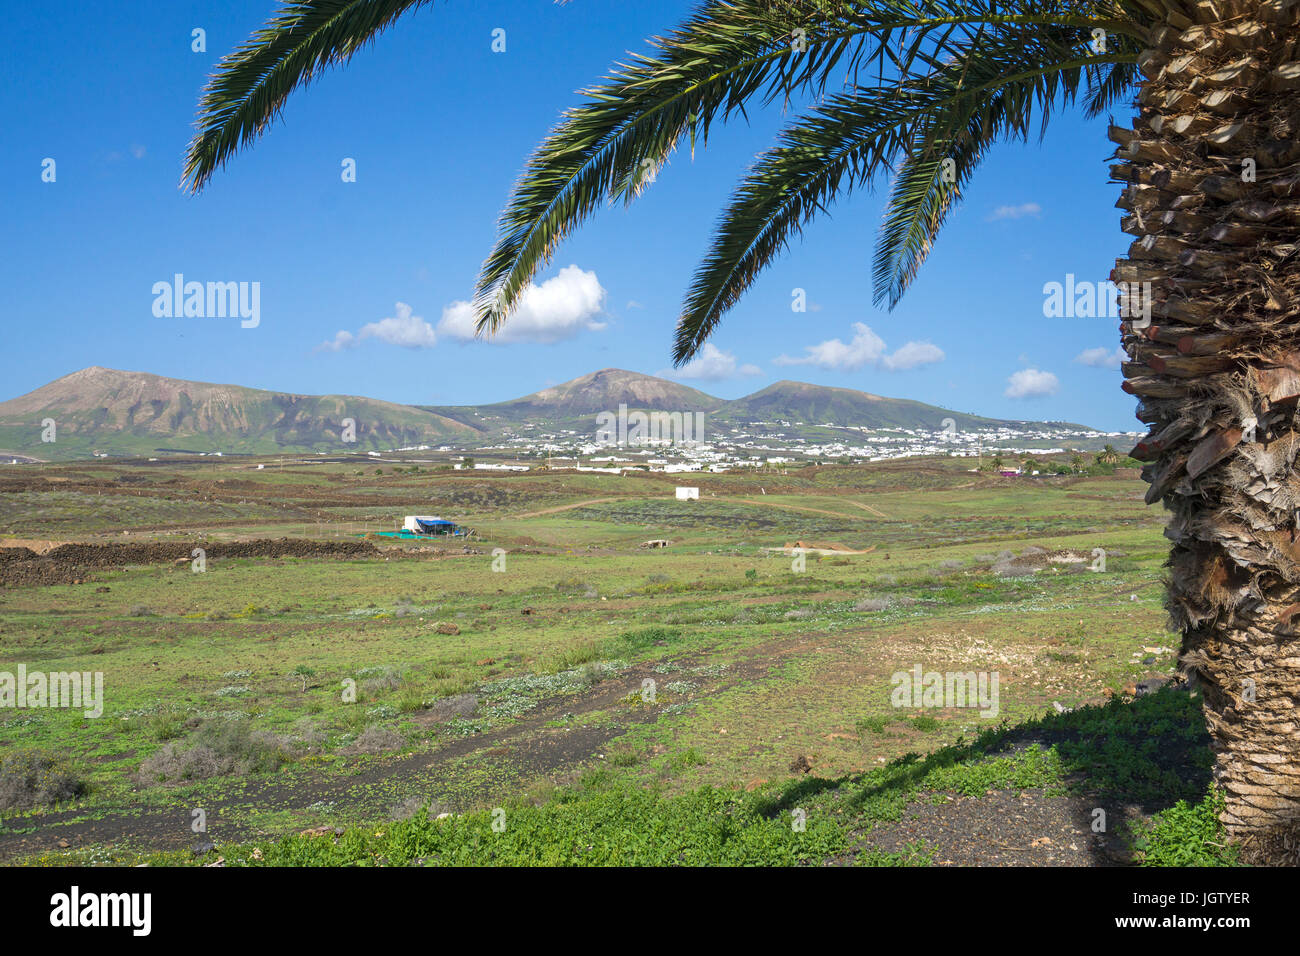 Paysage de Puerto del Carmen, Lanzarote, îles Canaries, Espagne, Europe Banque D'Images